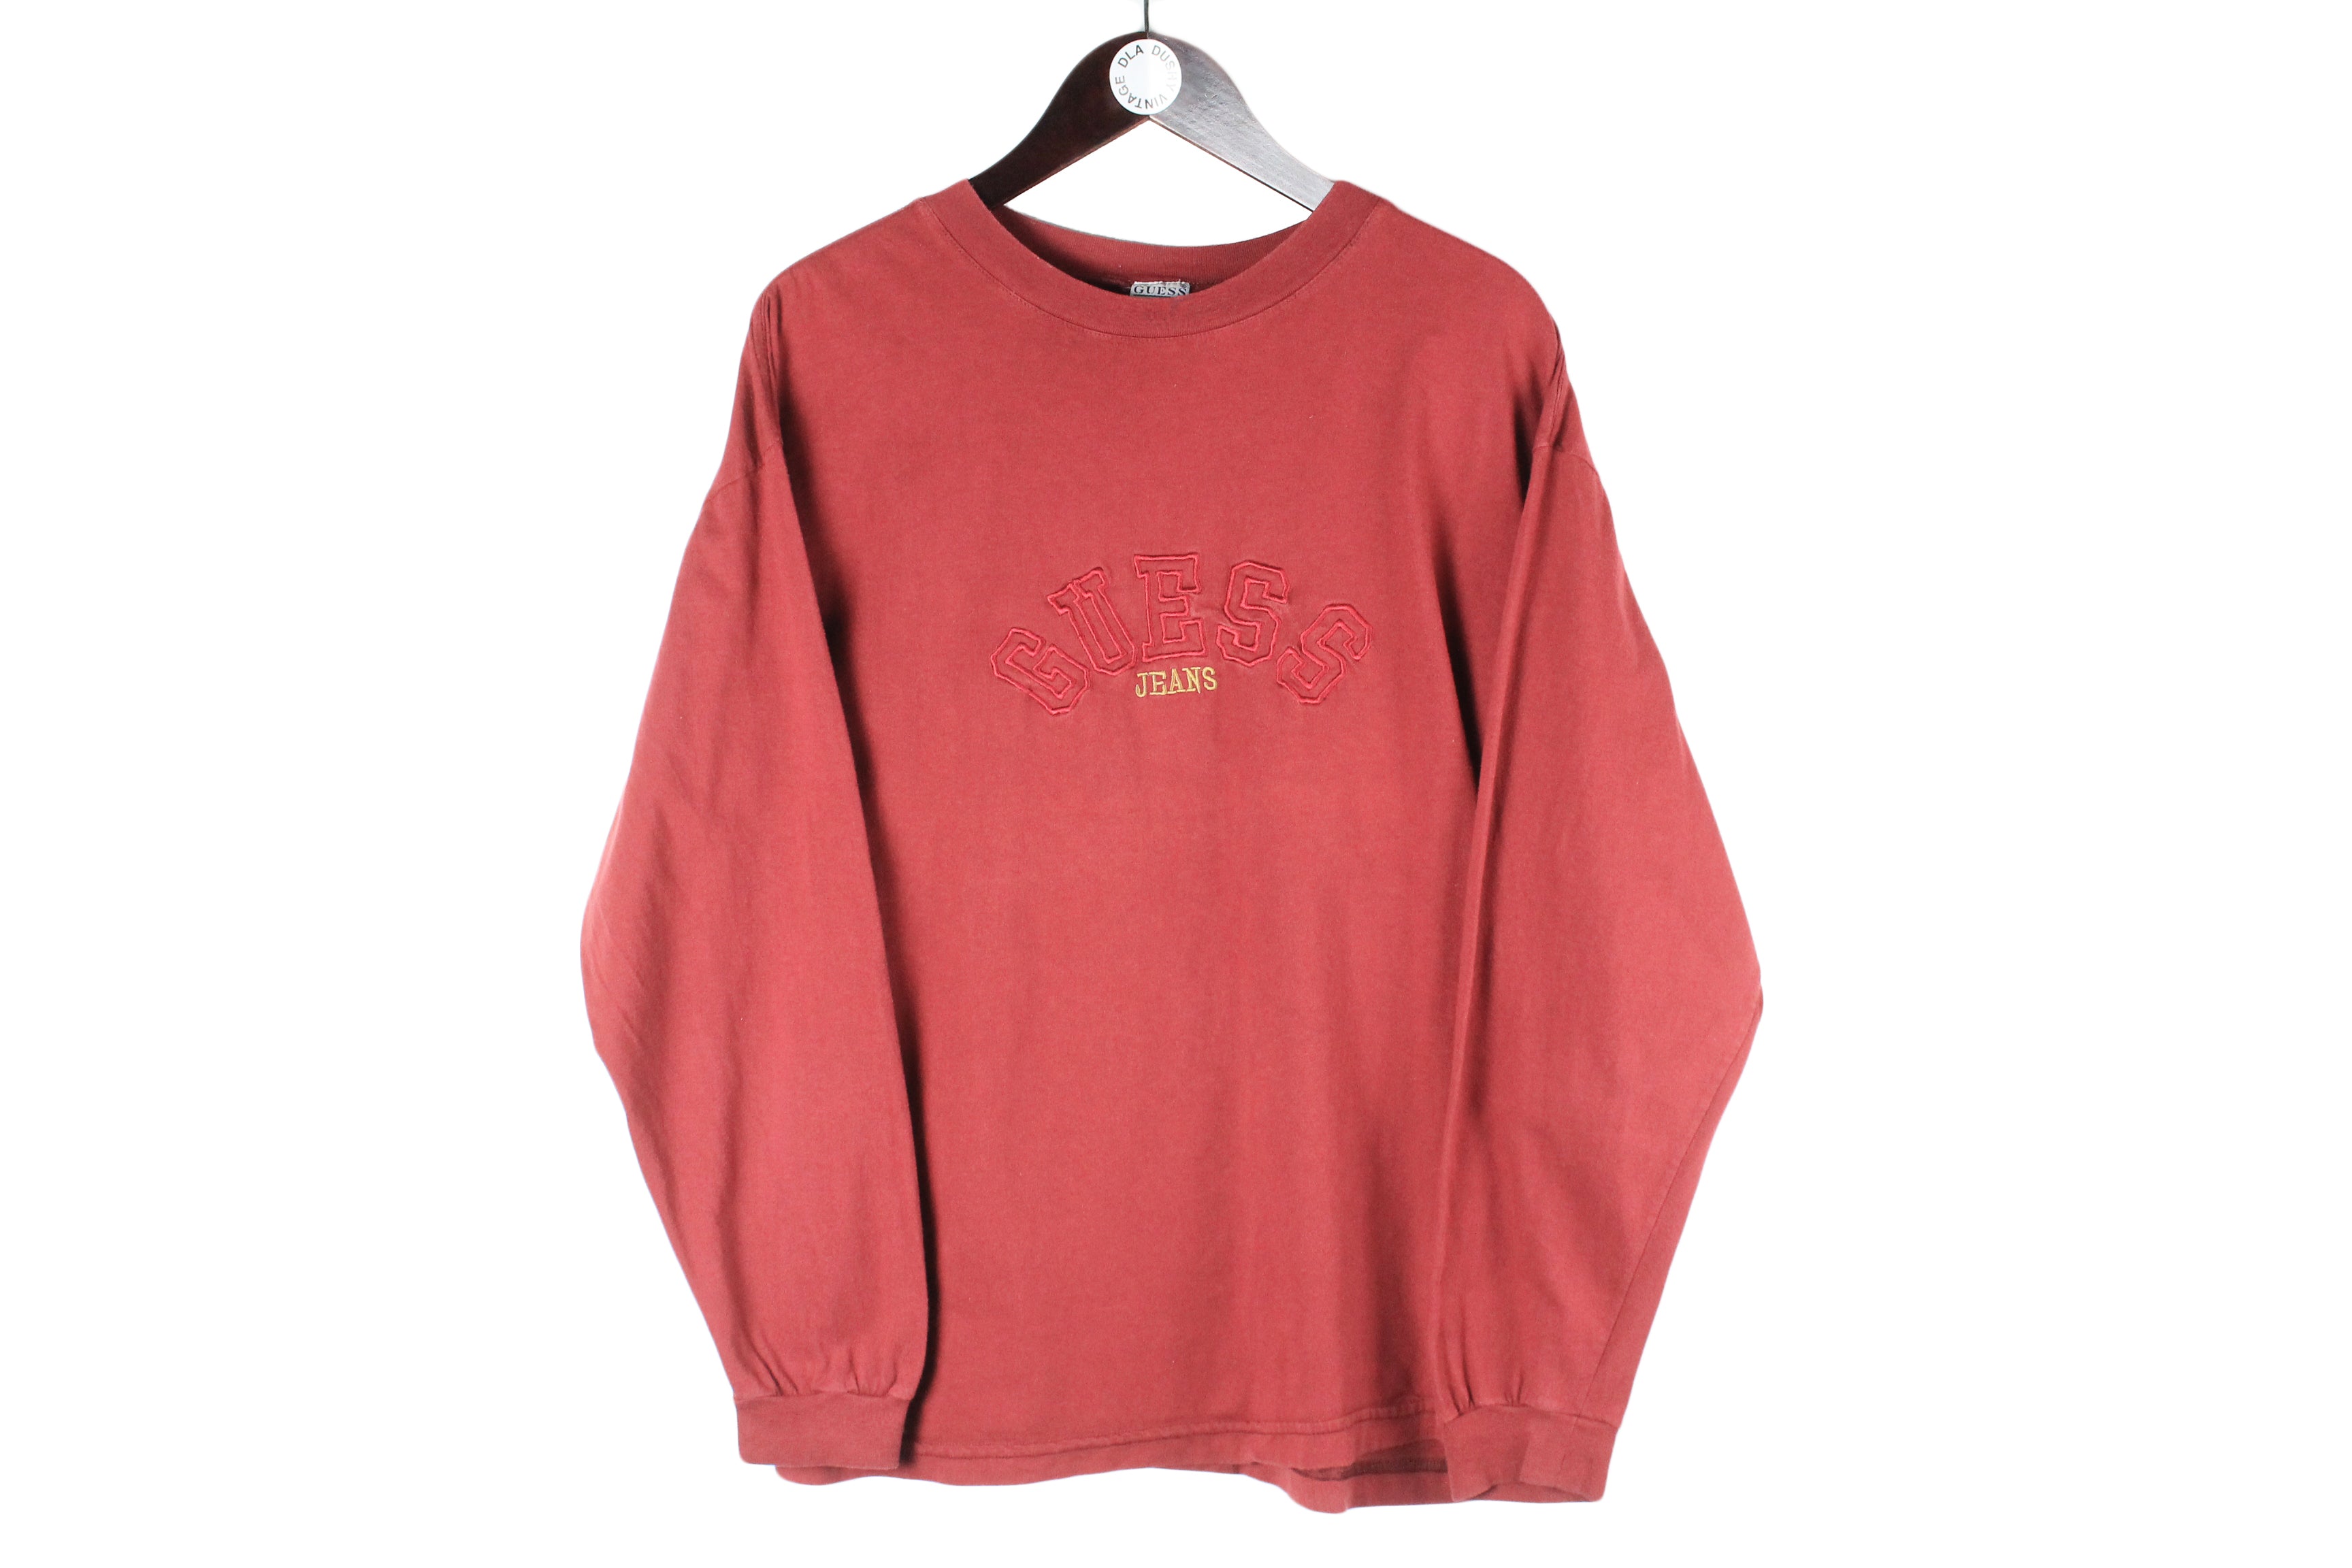 Guess Vintage 1994 Sweatshirt – Ropa Chidx